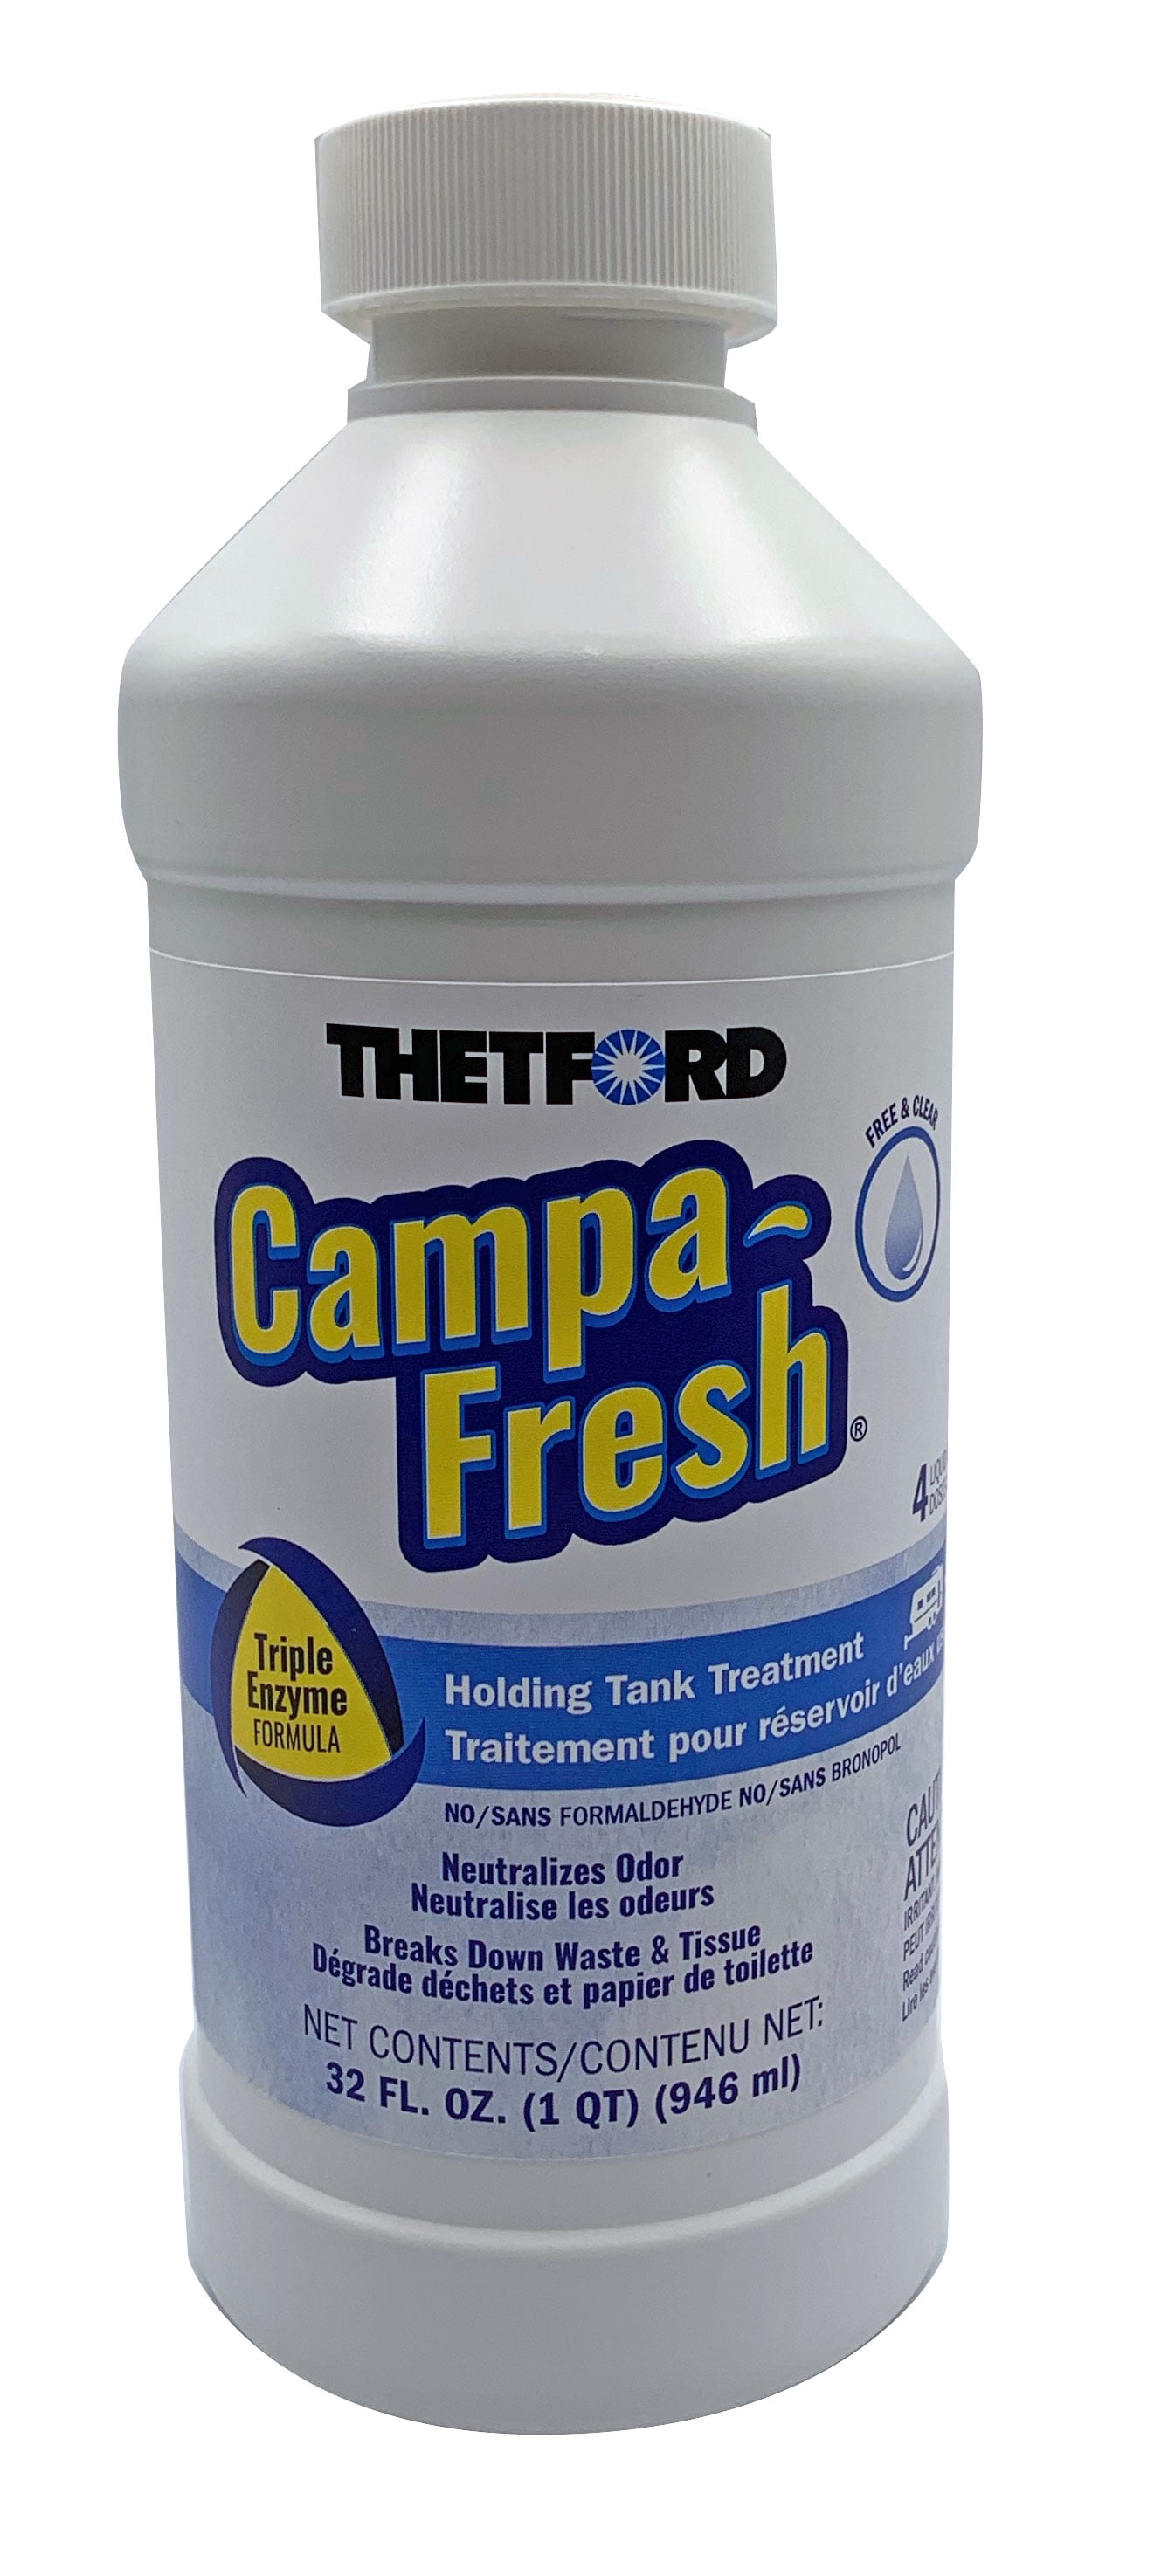 Thetford Campa-Fresh Free and Clear 32 oz Liquid Holding Tank Treatment